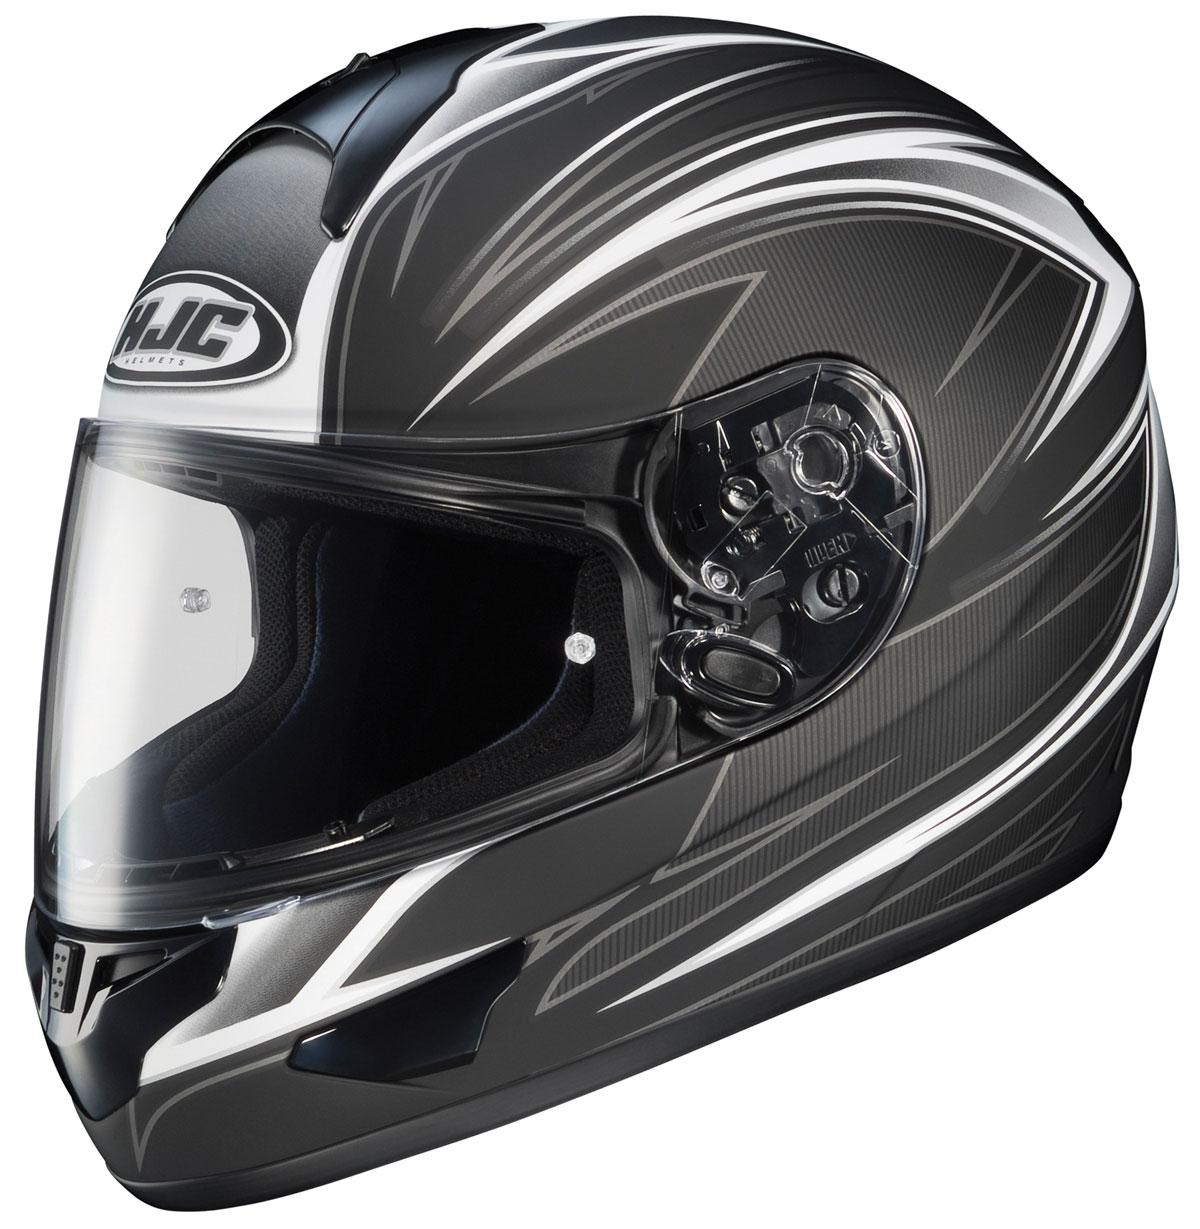 Hjc cl-16 razz motorcycle helmet black, silver, white large